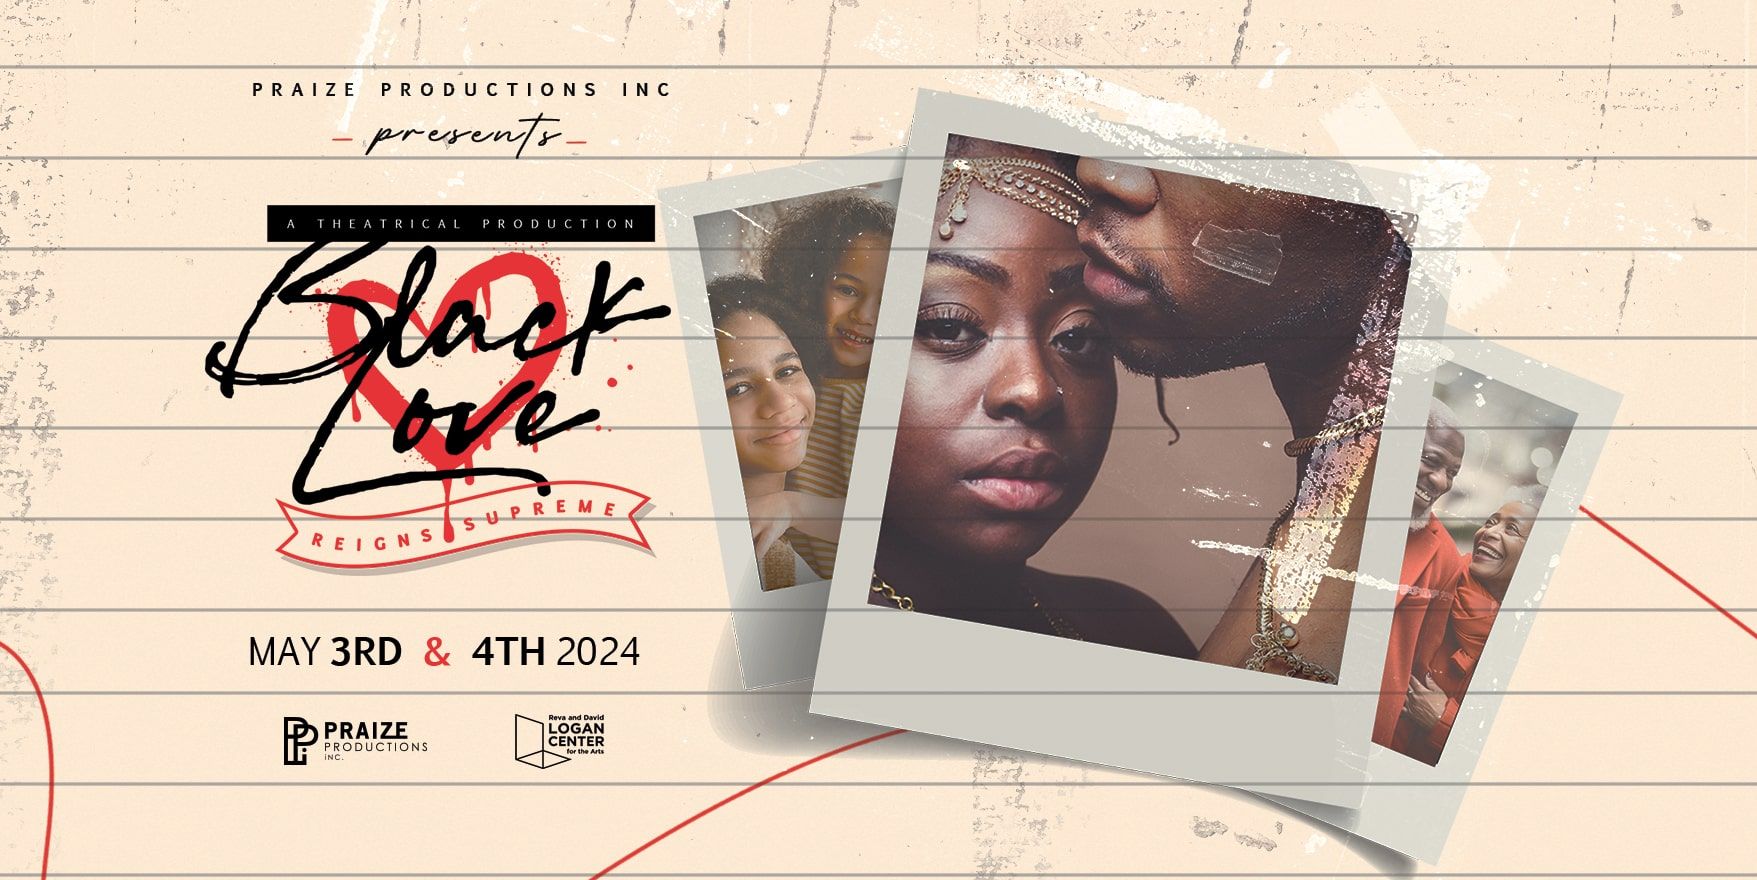 Praize Productions Presents Black Love Reigns Supreme promotional image